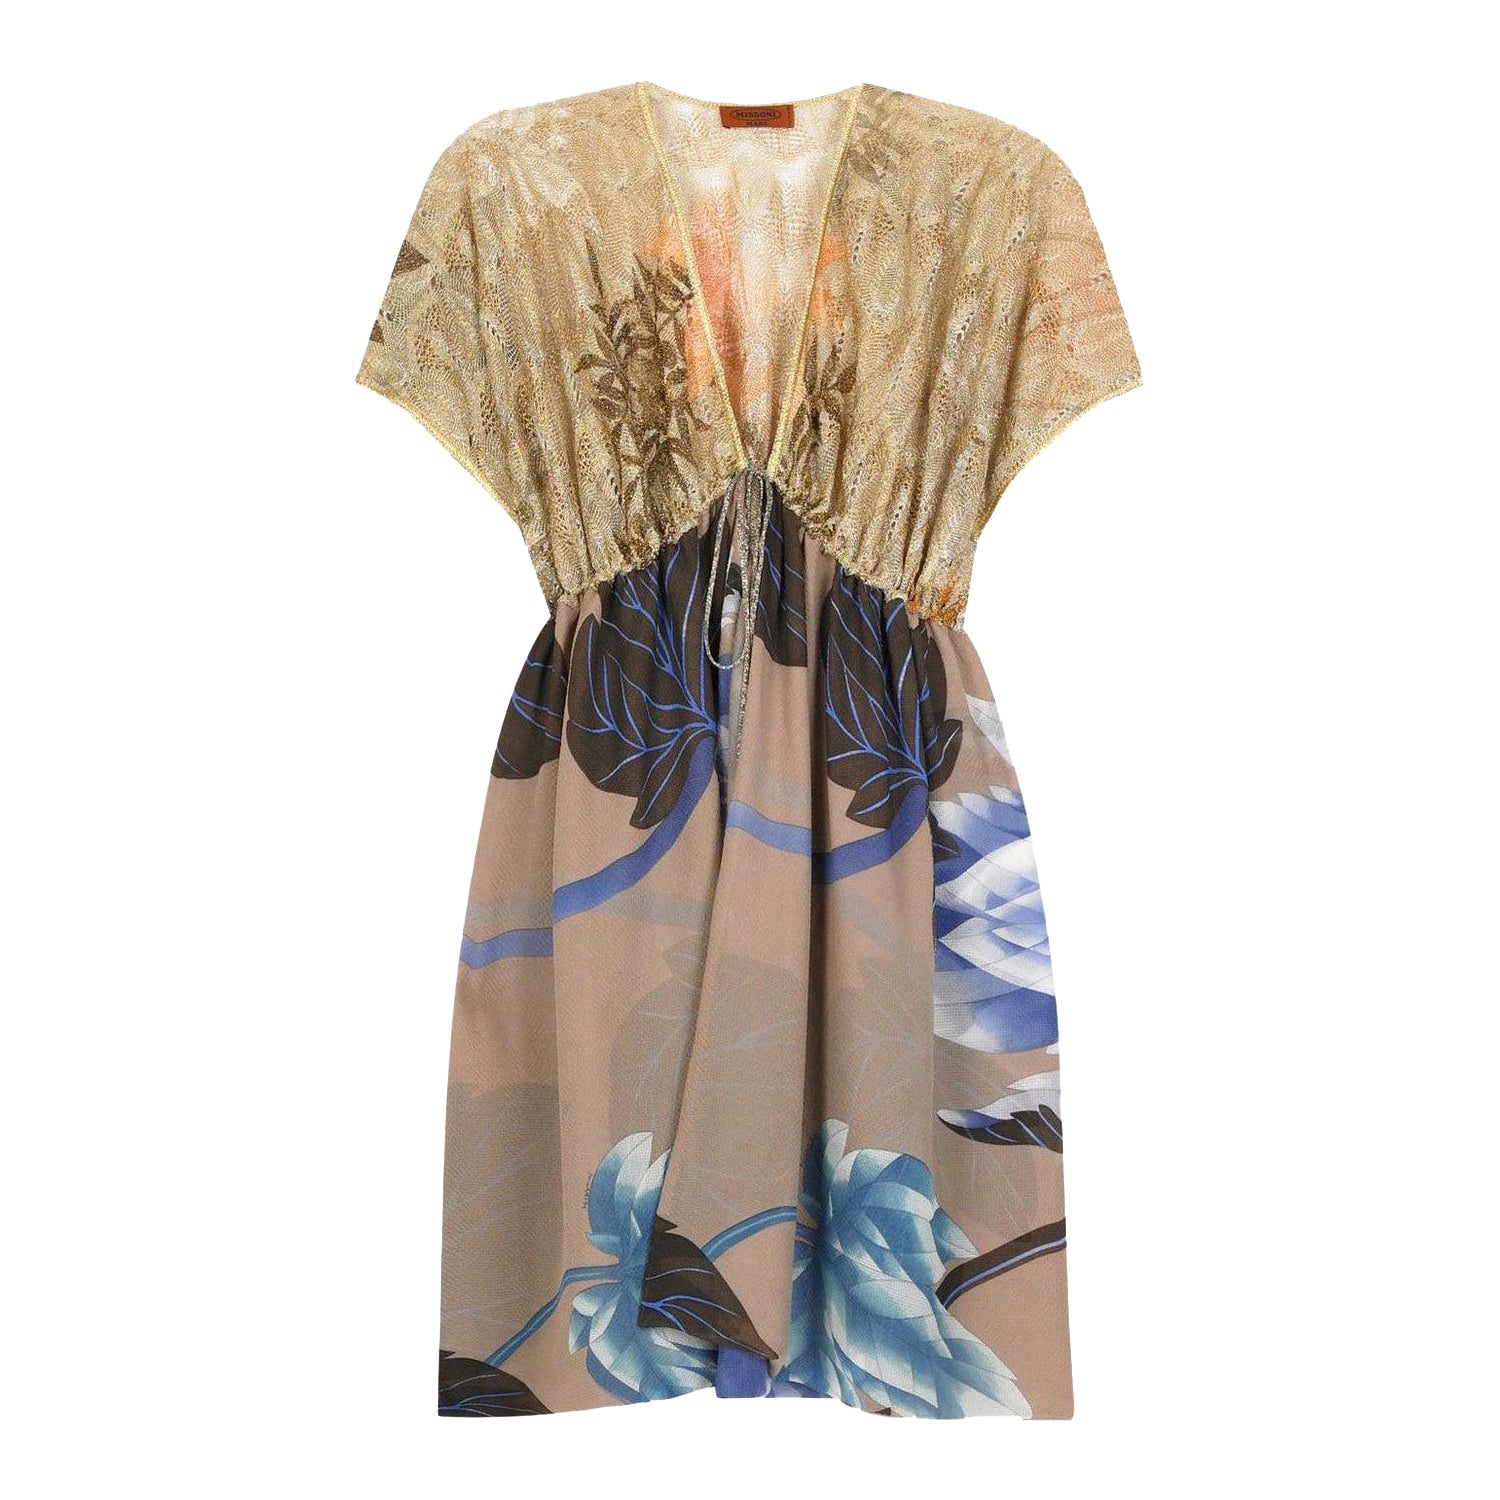 NEU Missoni Gold Metallic Crochet Knit Floral Kaftan Tunika Kleid Cover Up 40 im Angebot